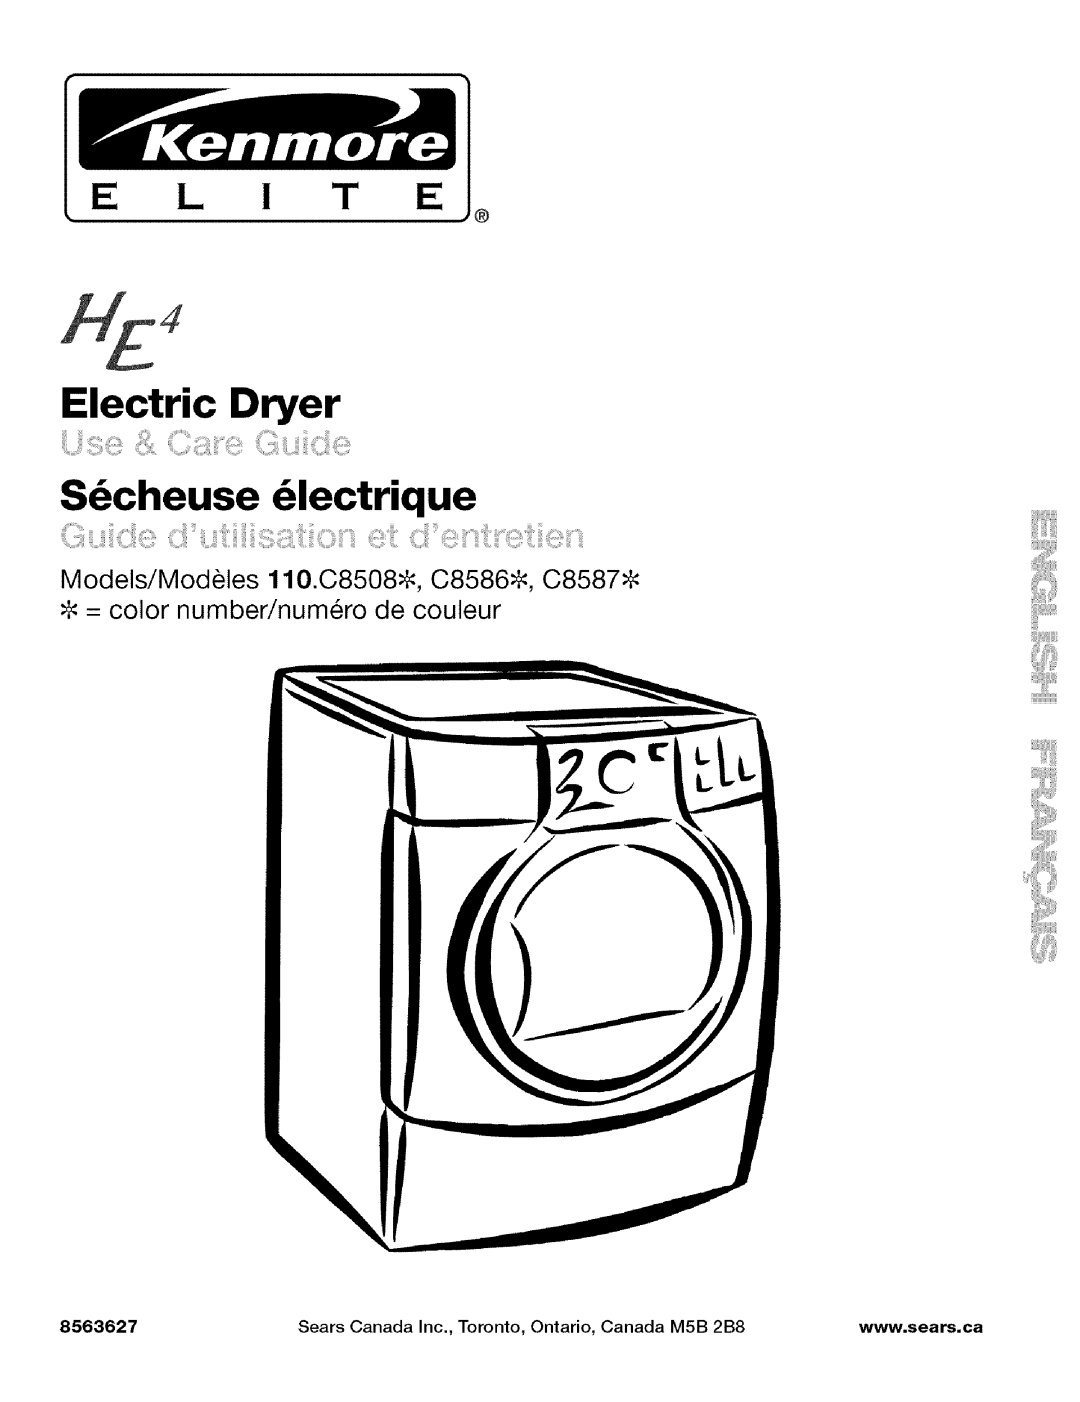 Kenmore C8586 manual Scheuse lectrique, Electric Dryer, Sears Canada Inc., Toronto, Ontario, Canada M5B 2B8, 8563627 